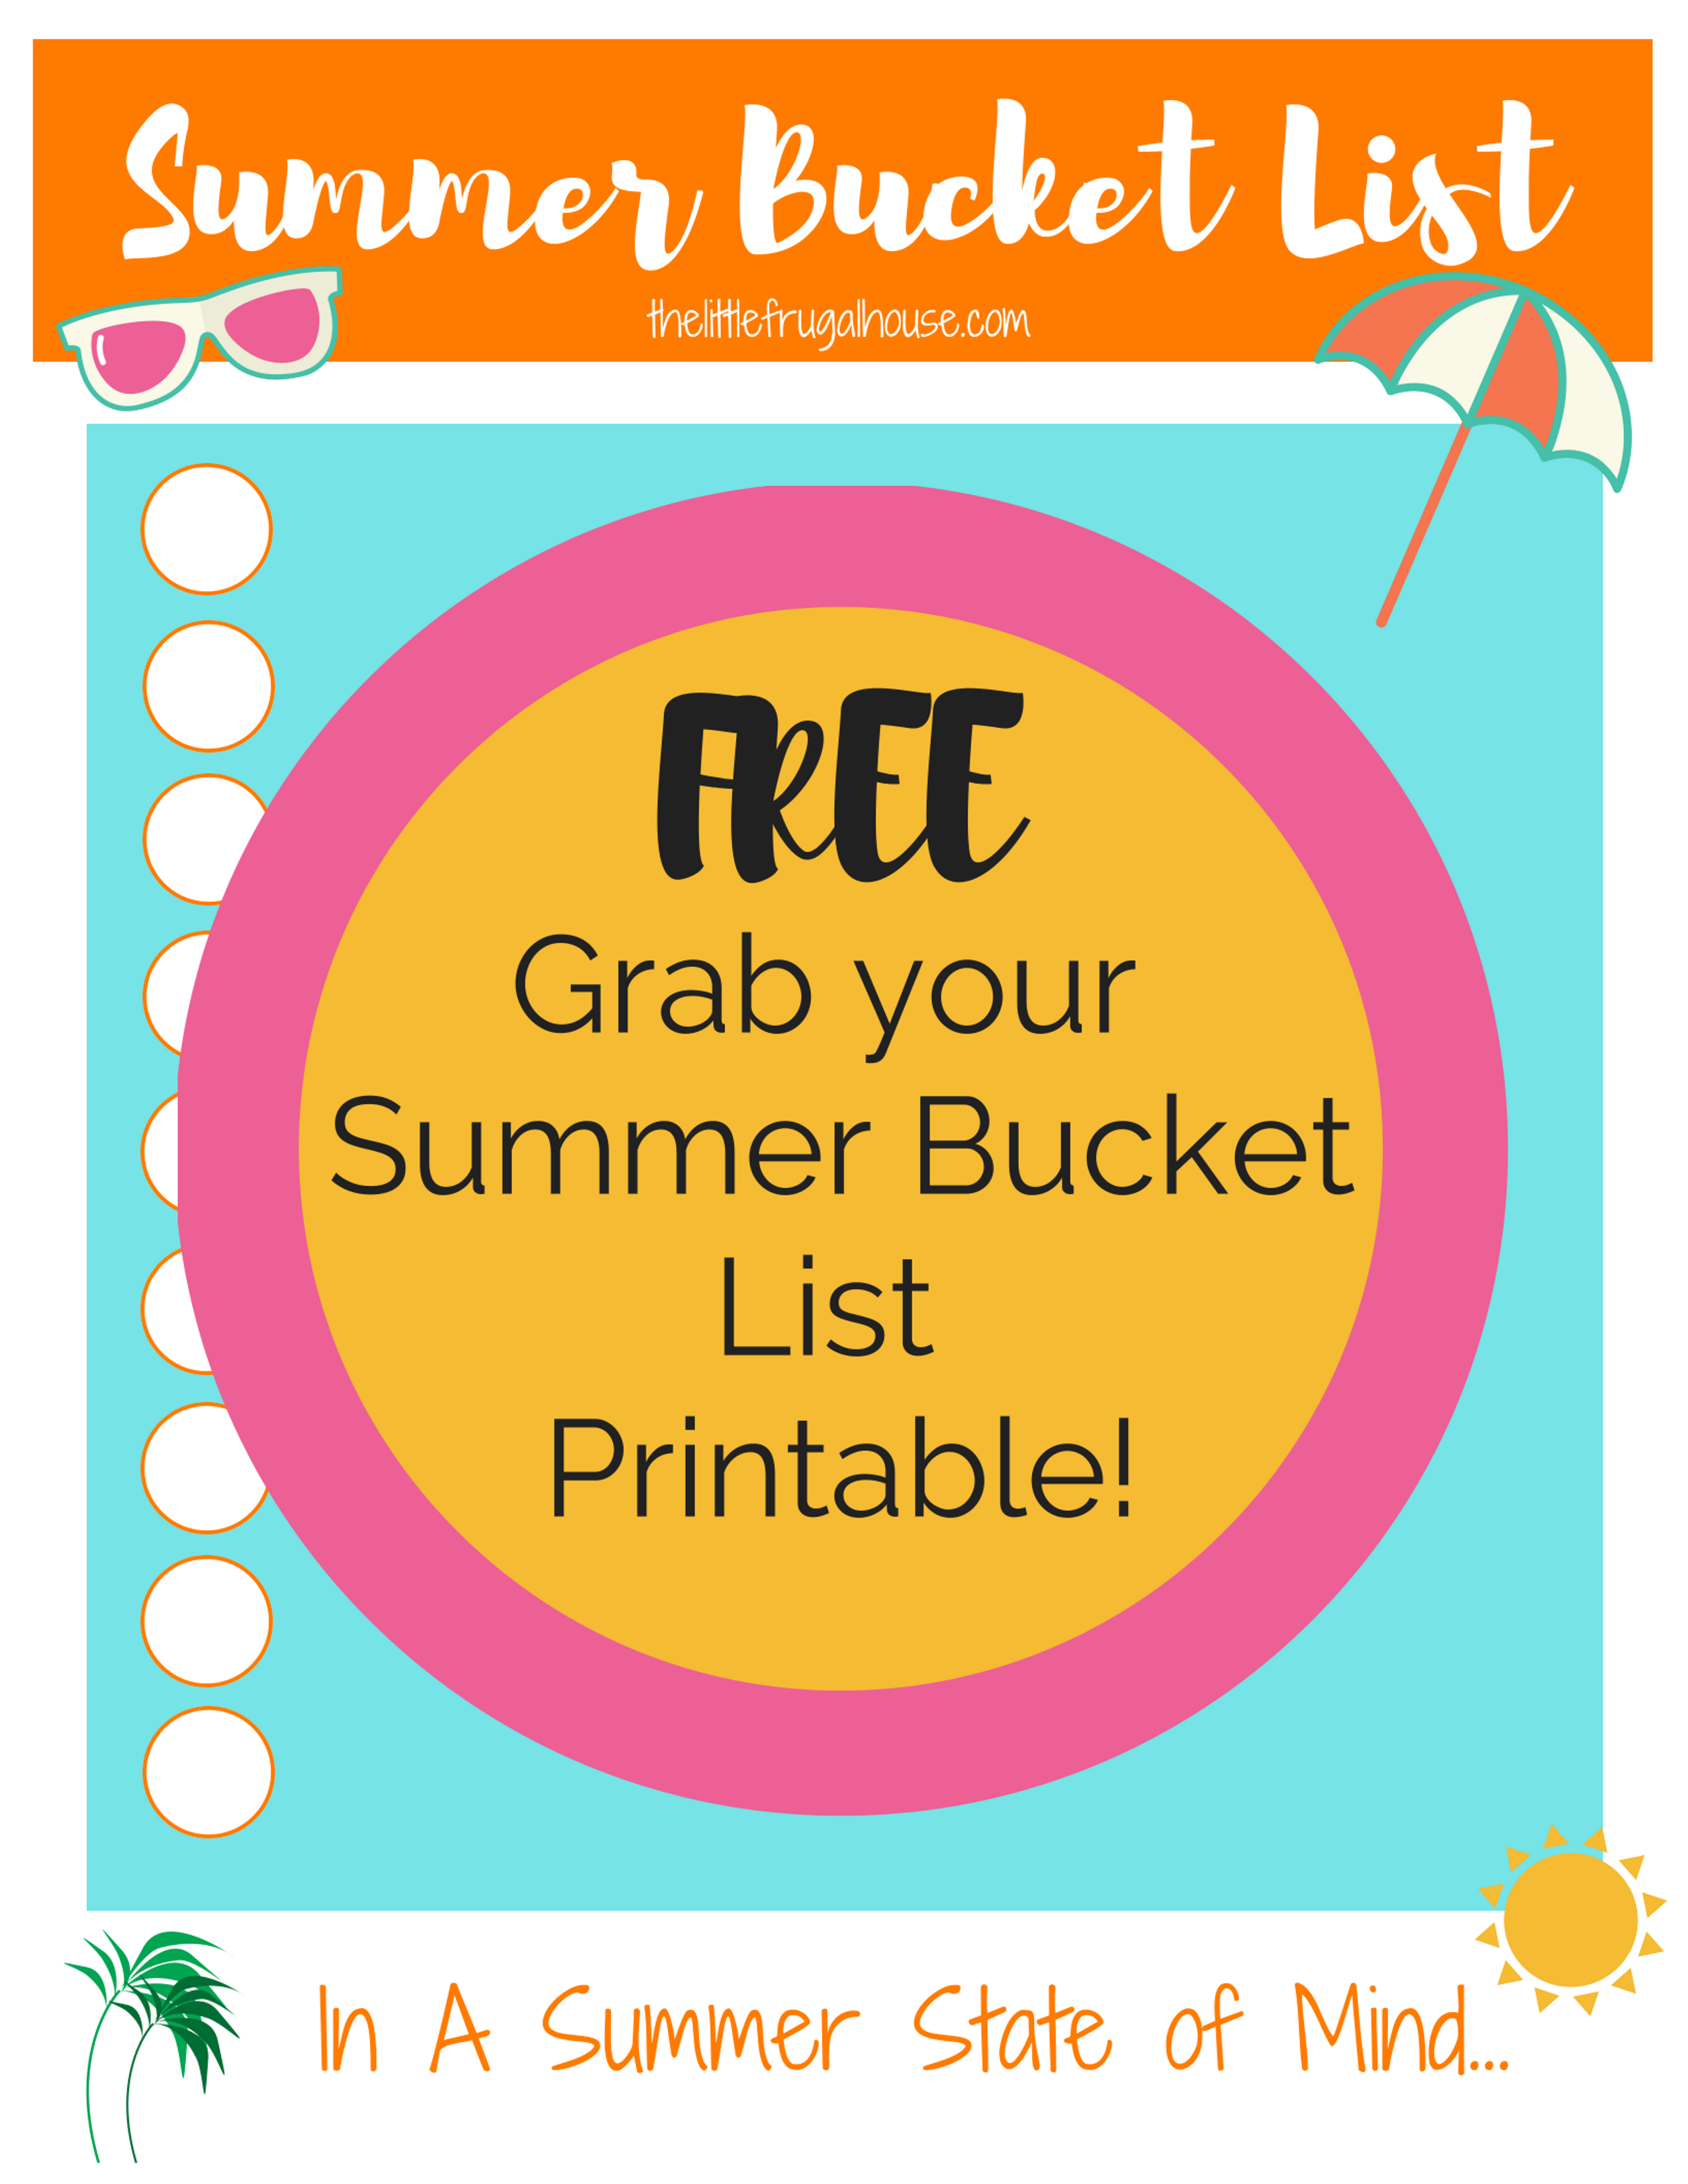 free-summer-printable-summer-bucket-list-the-little-frugal-house